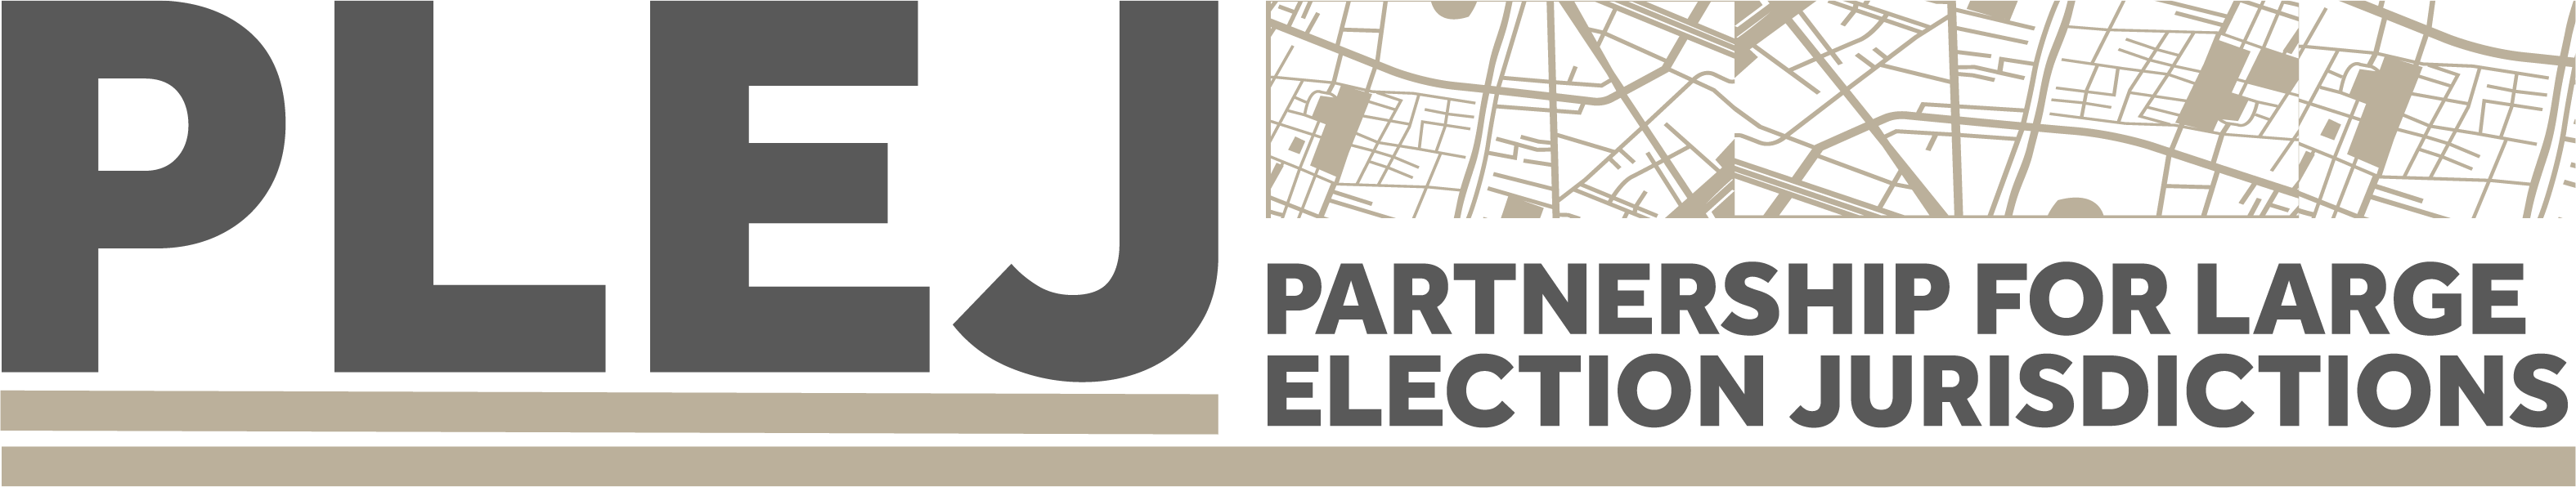 Partnership for Large Election Jurisdictions